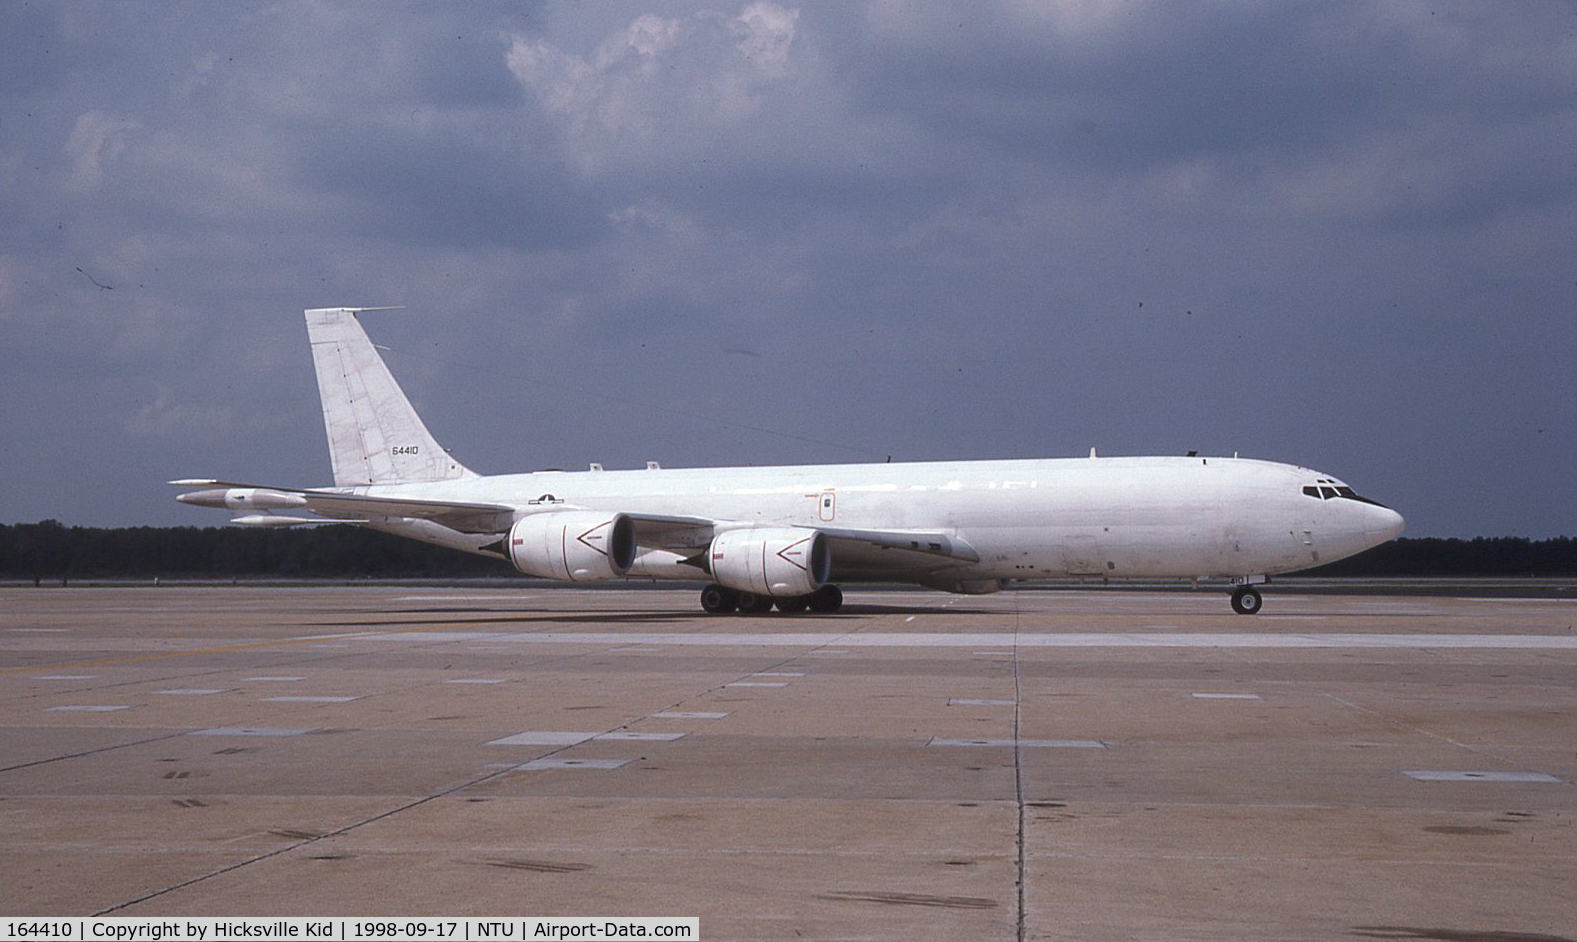 164410, 1991 Boeing E-6A Mercury C/N 24509, E-6A 164410 taken 17 Sept 1998 at NAS Oceana.